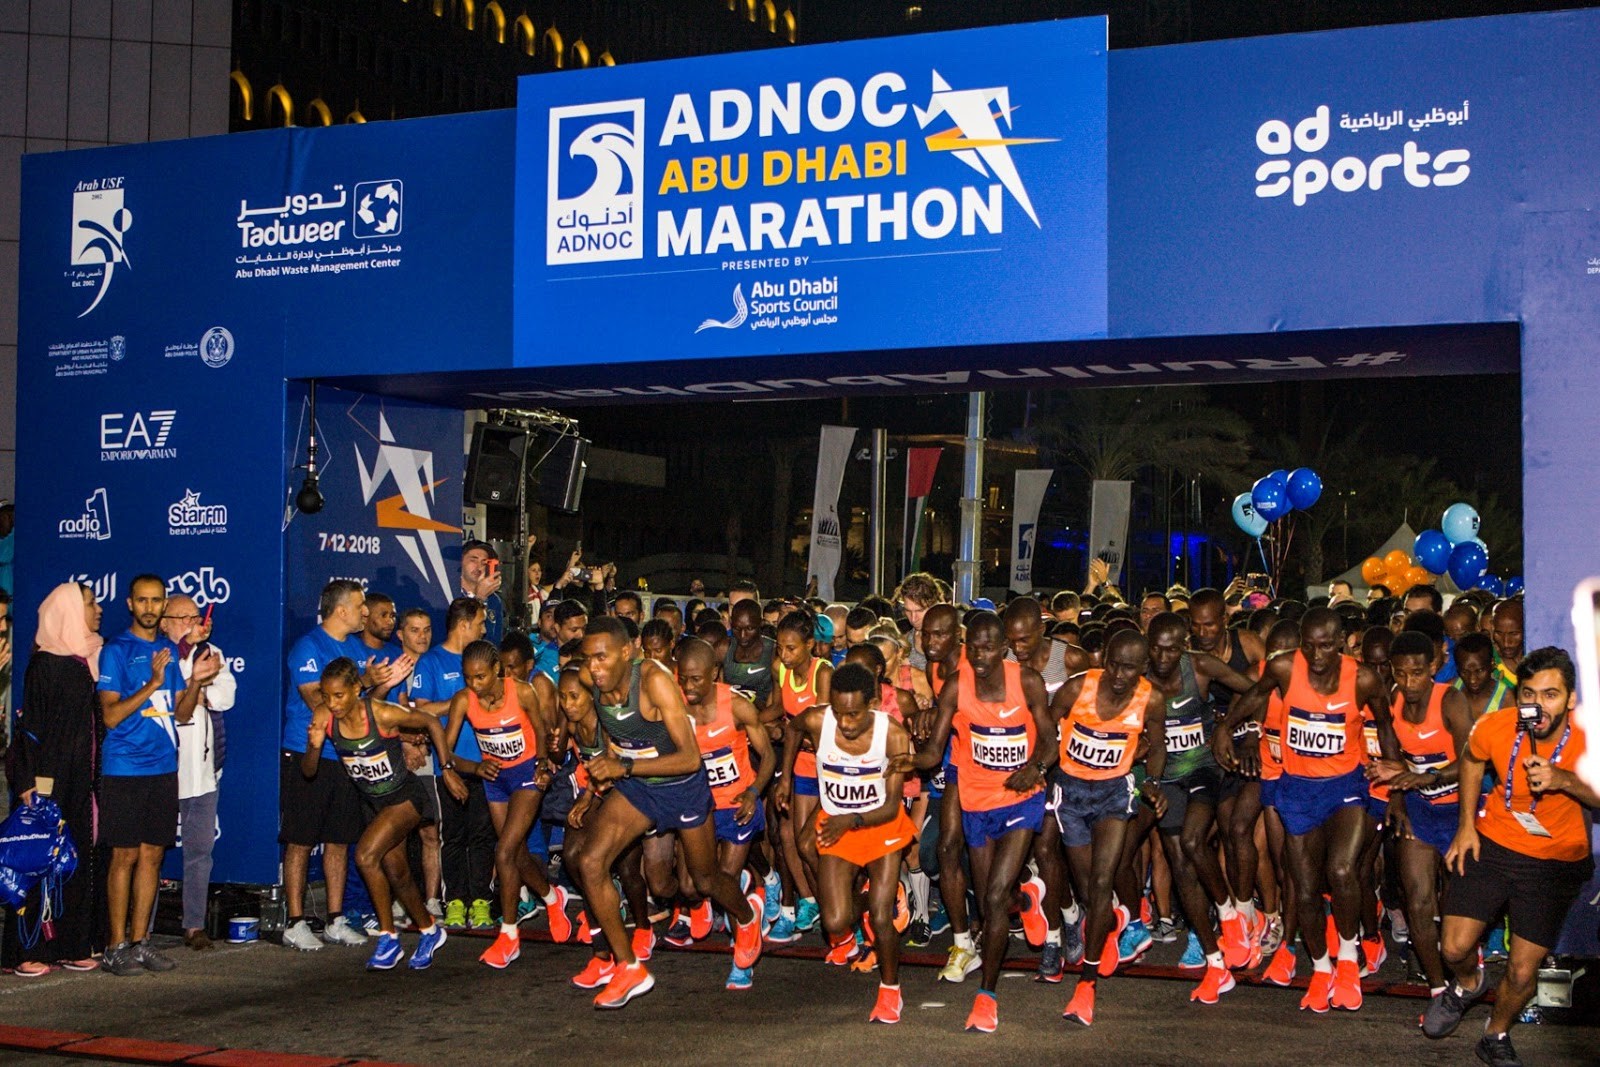 Abu Dhabi Marathon has been postponed until 2021 due to COVID-19 concerns